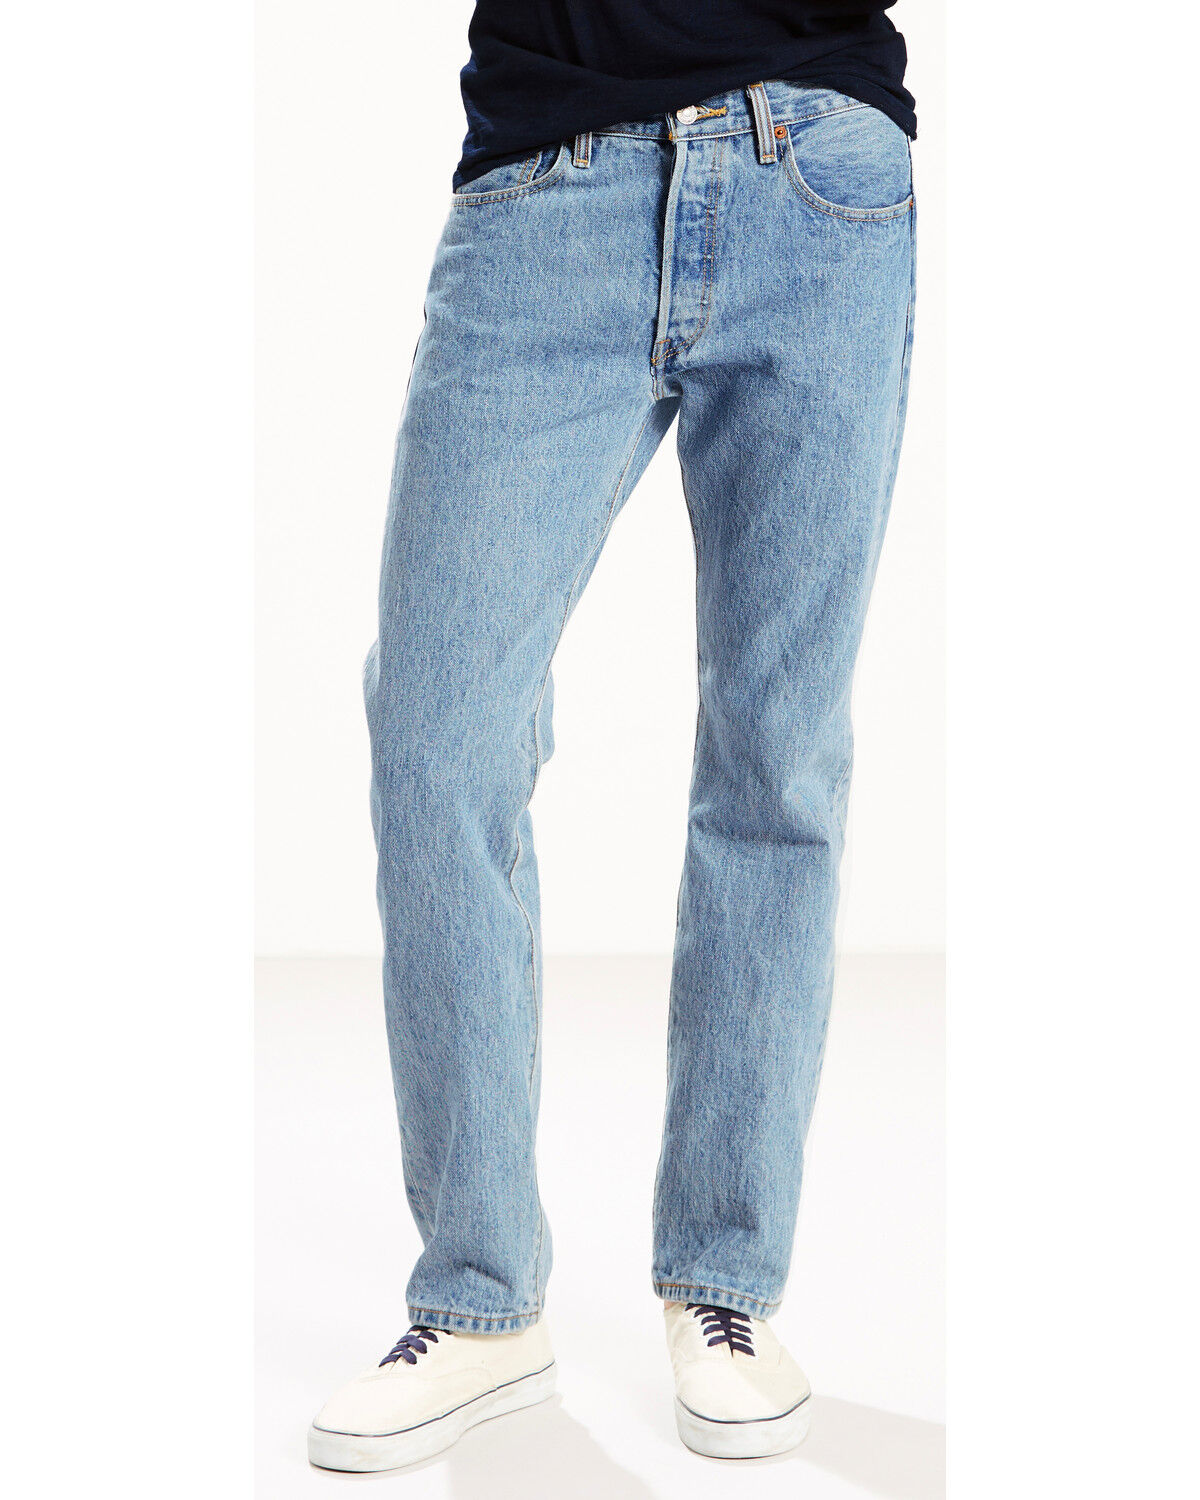 501 stonewash jeans